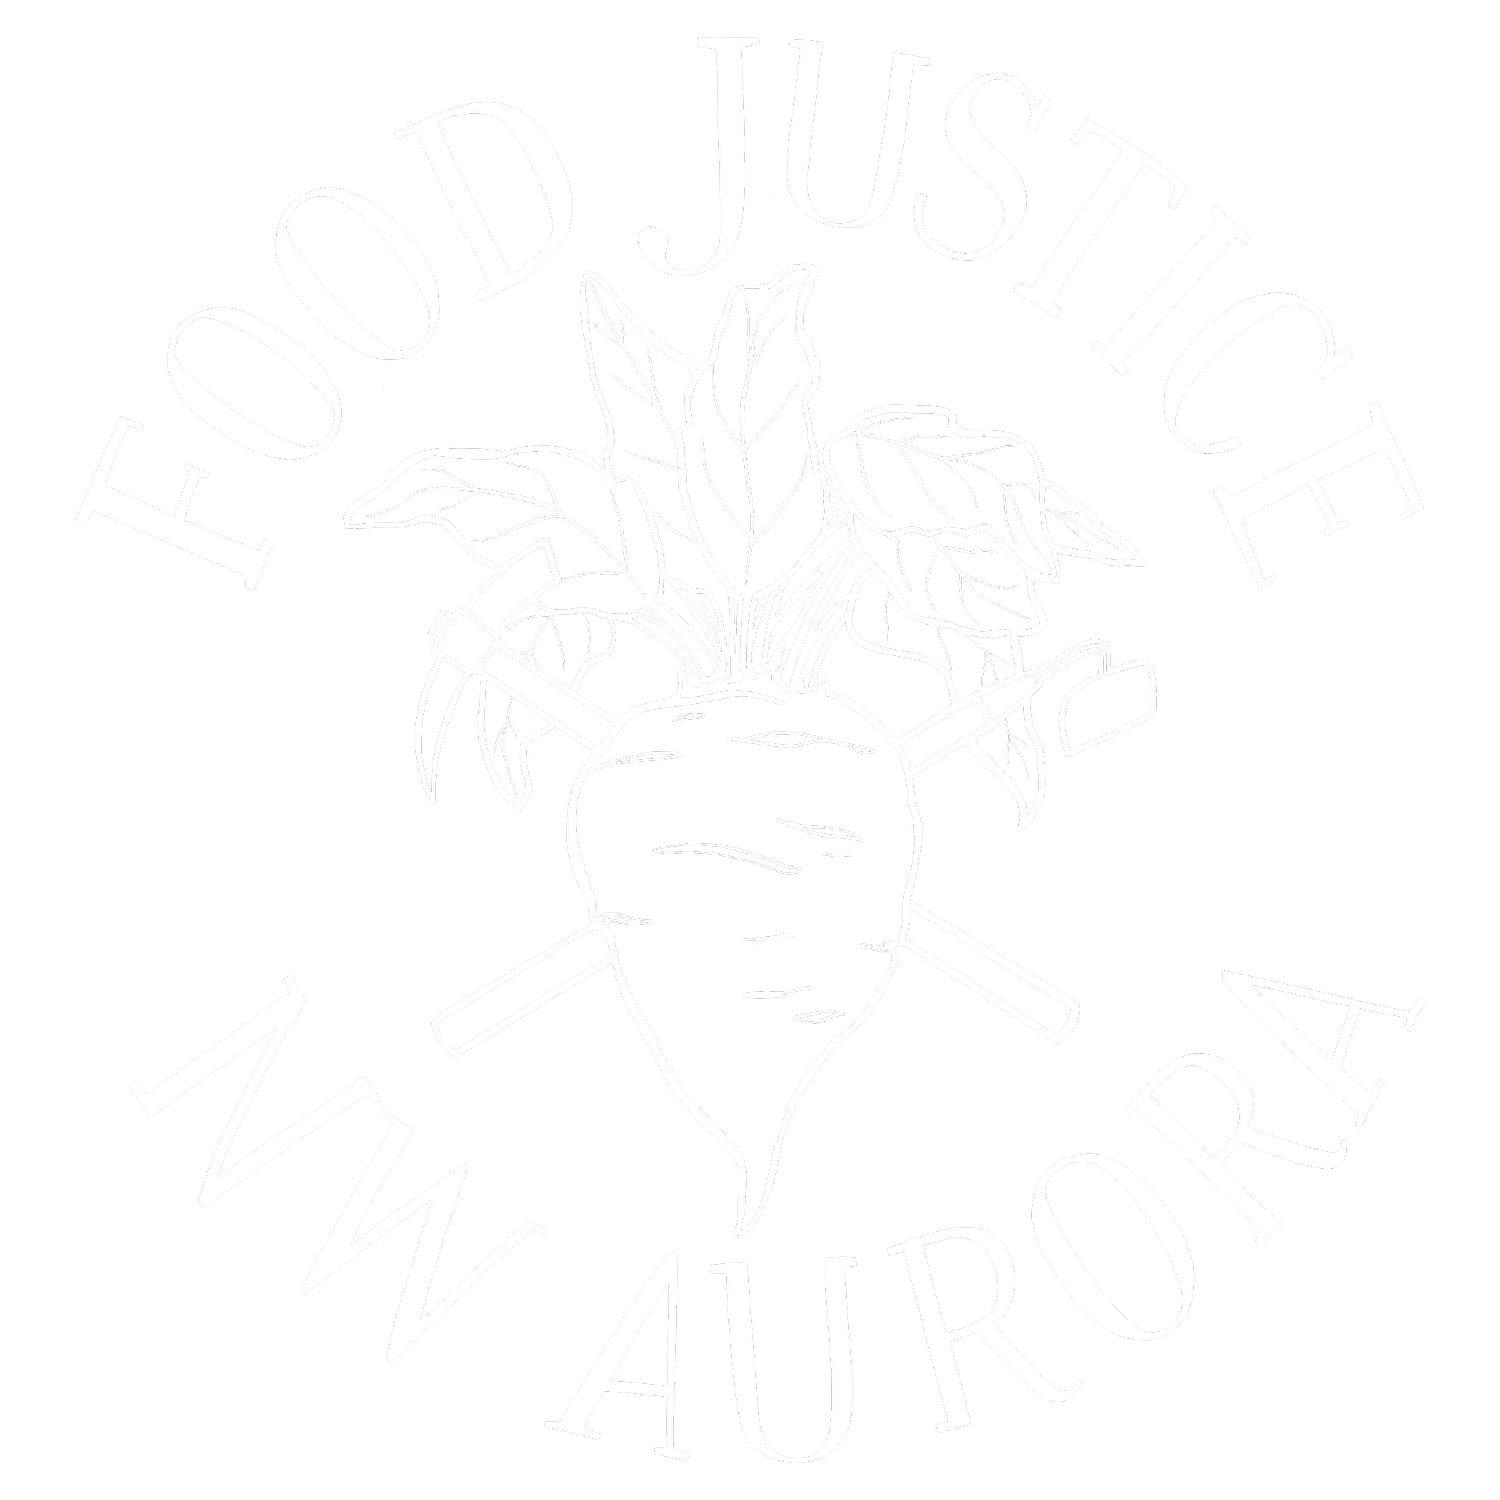 Food Justice NW Aurora